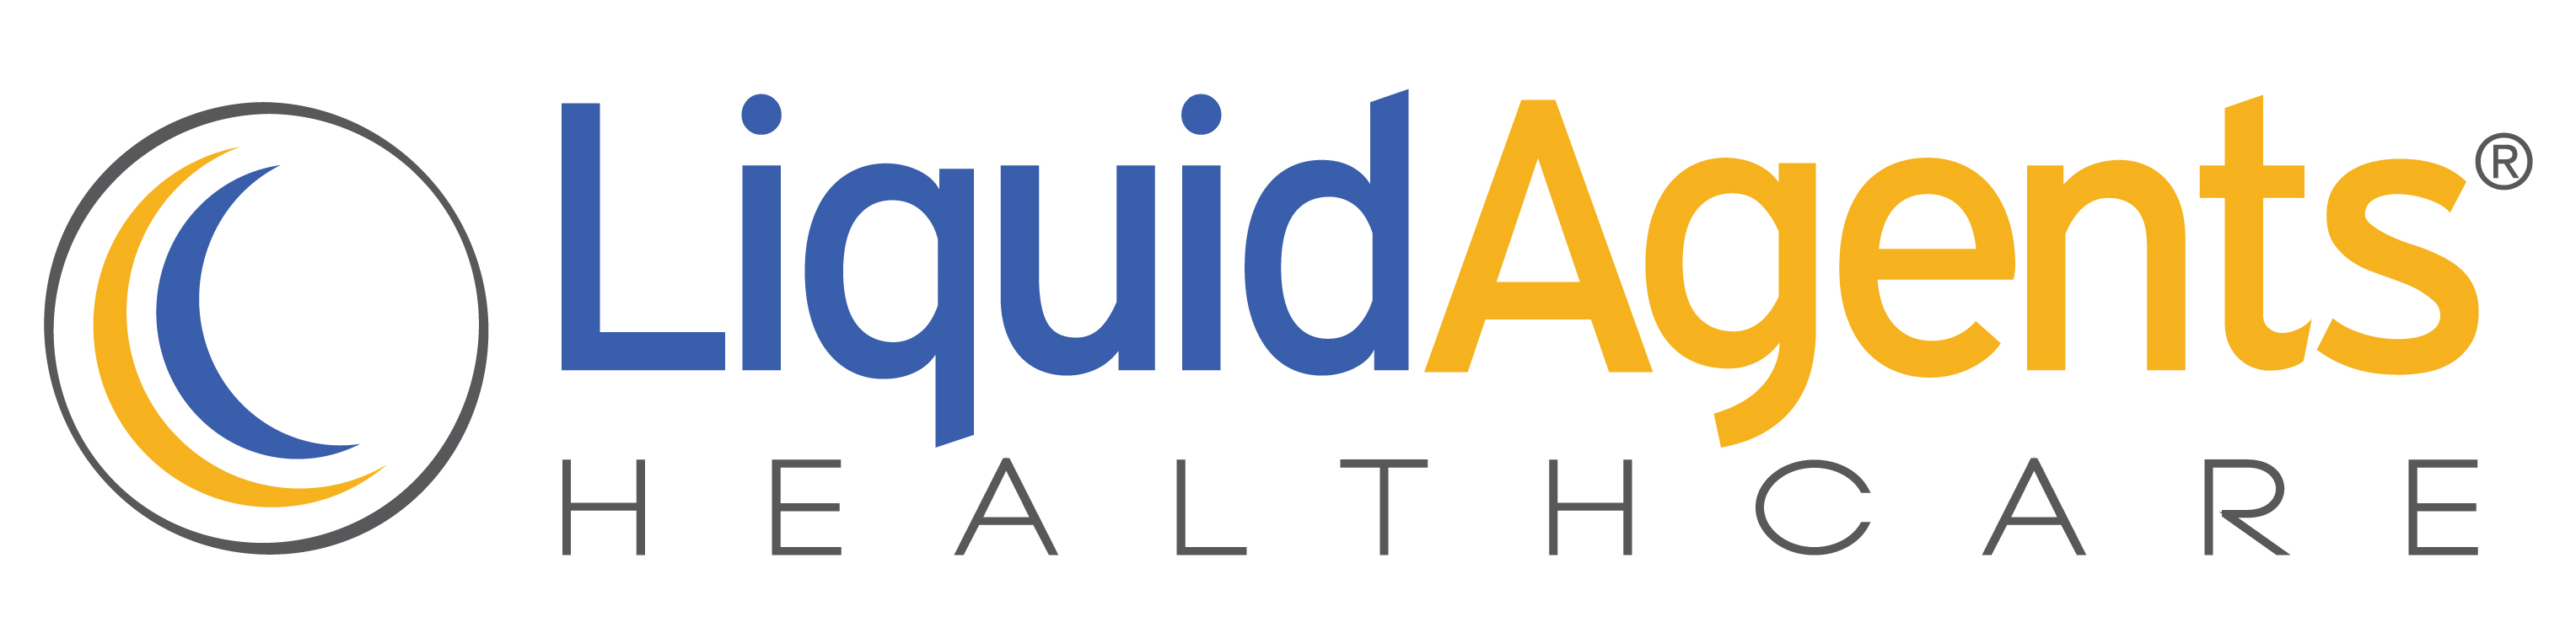 LiquidAgents Healthcare, LLC logo